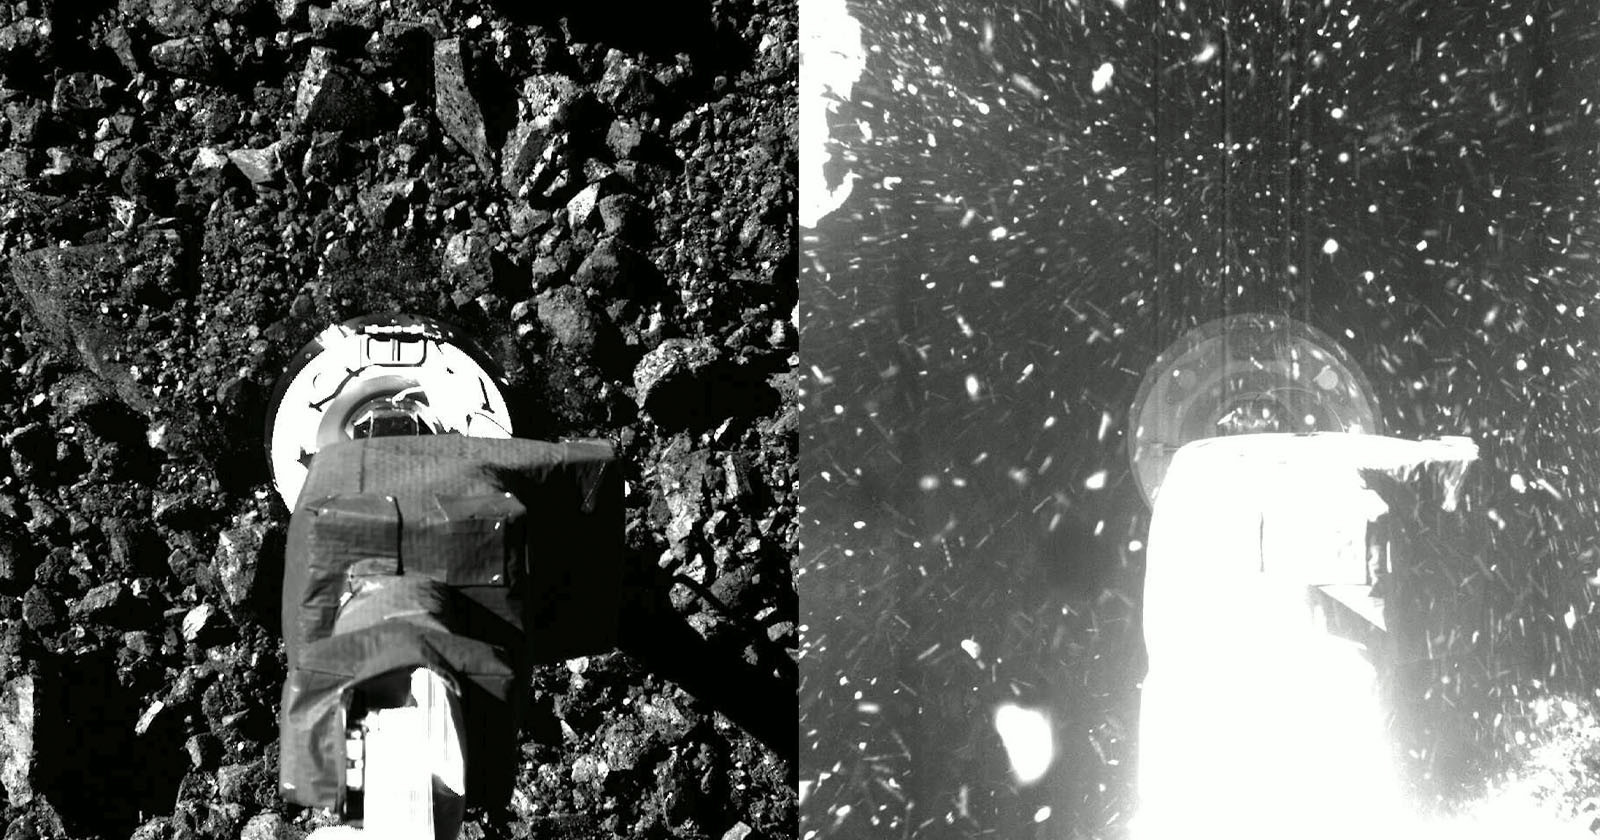  nasa footage shows asteroid surface like 